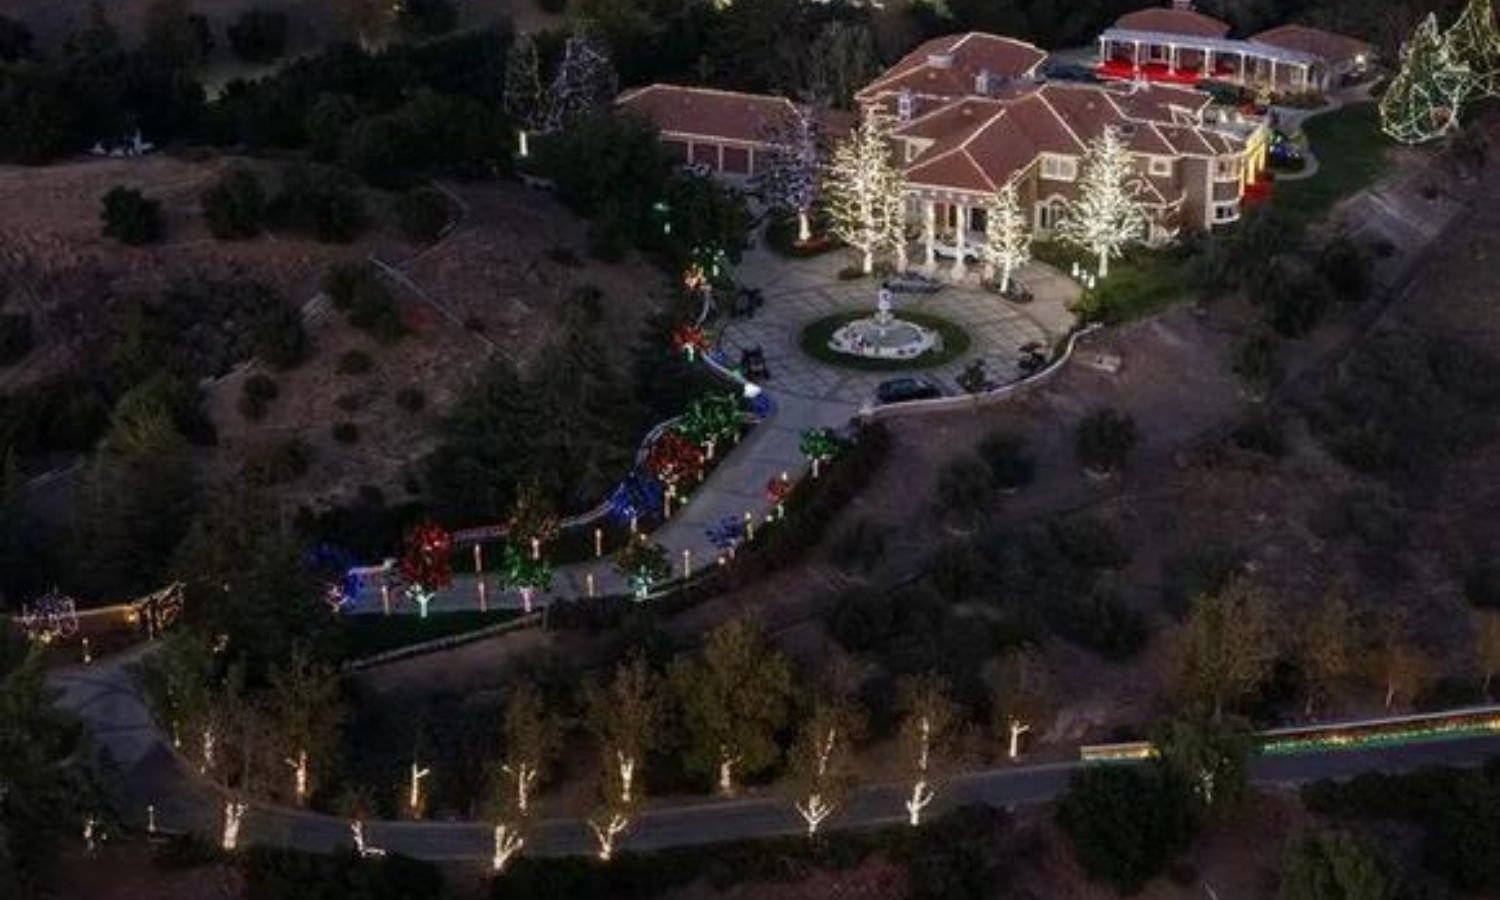 Jamie Foxx Illuminates Mansion in Spectacular Christmas Light